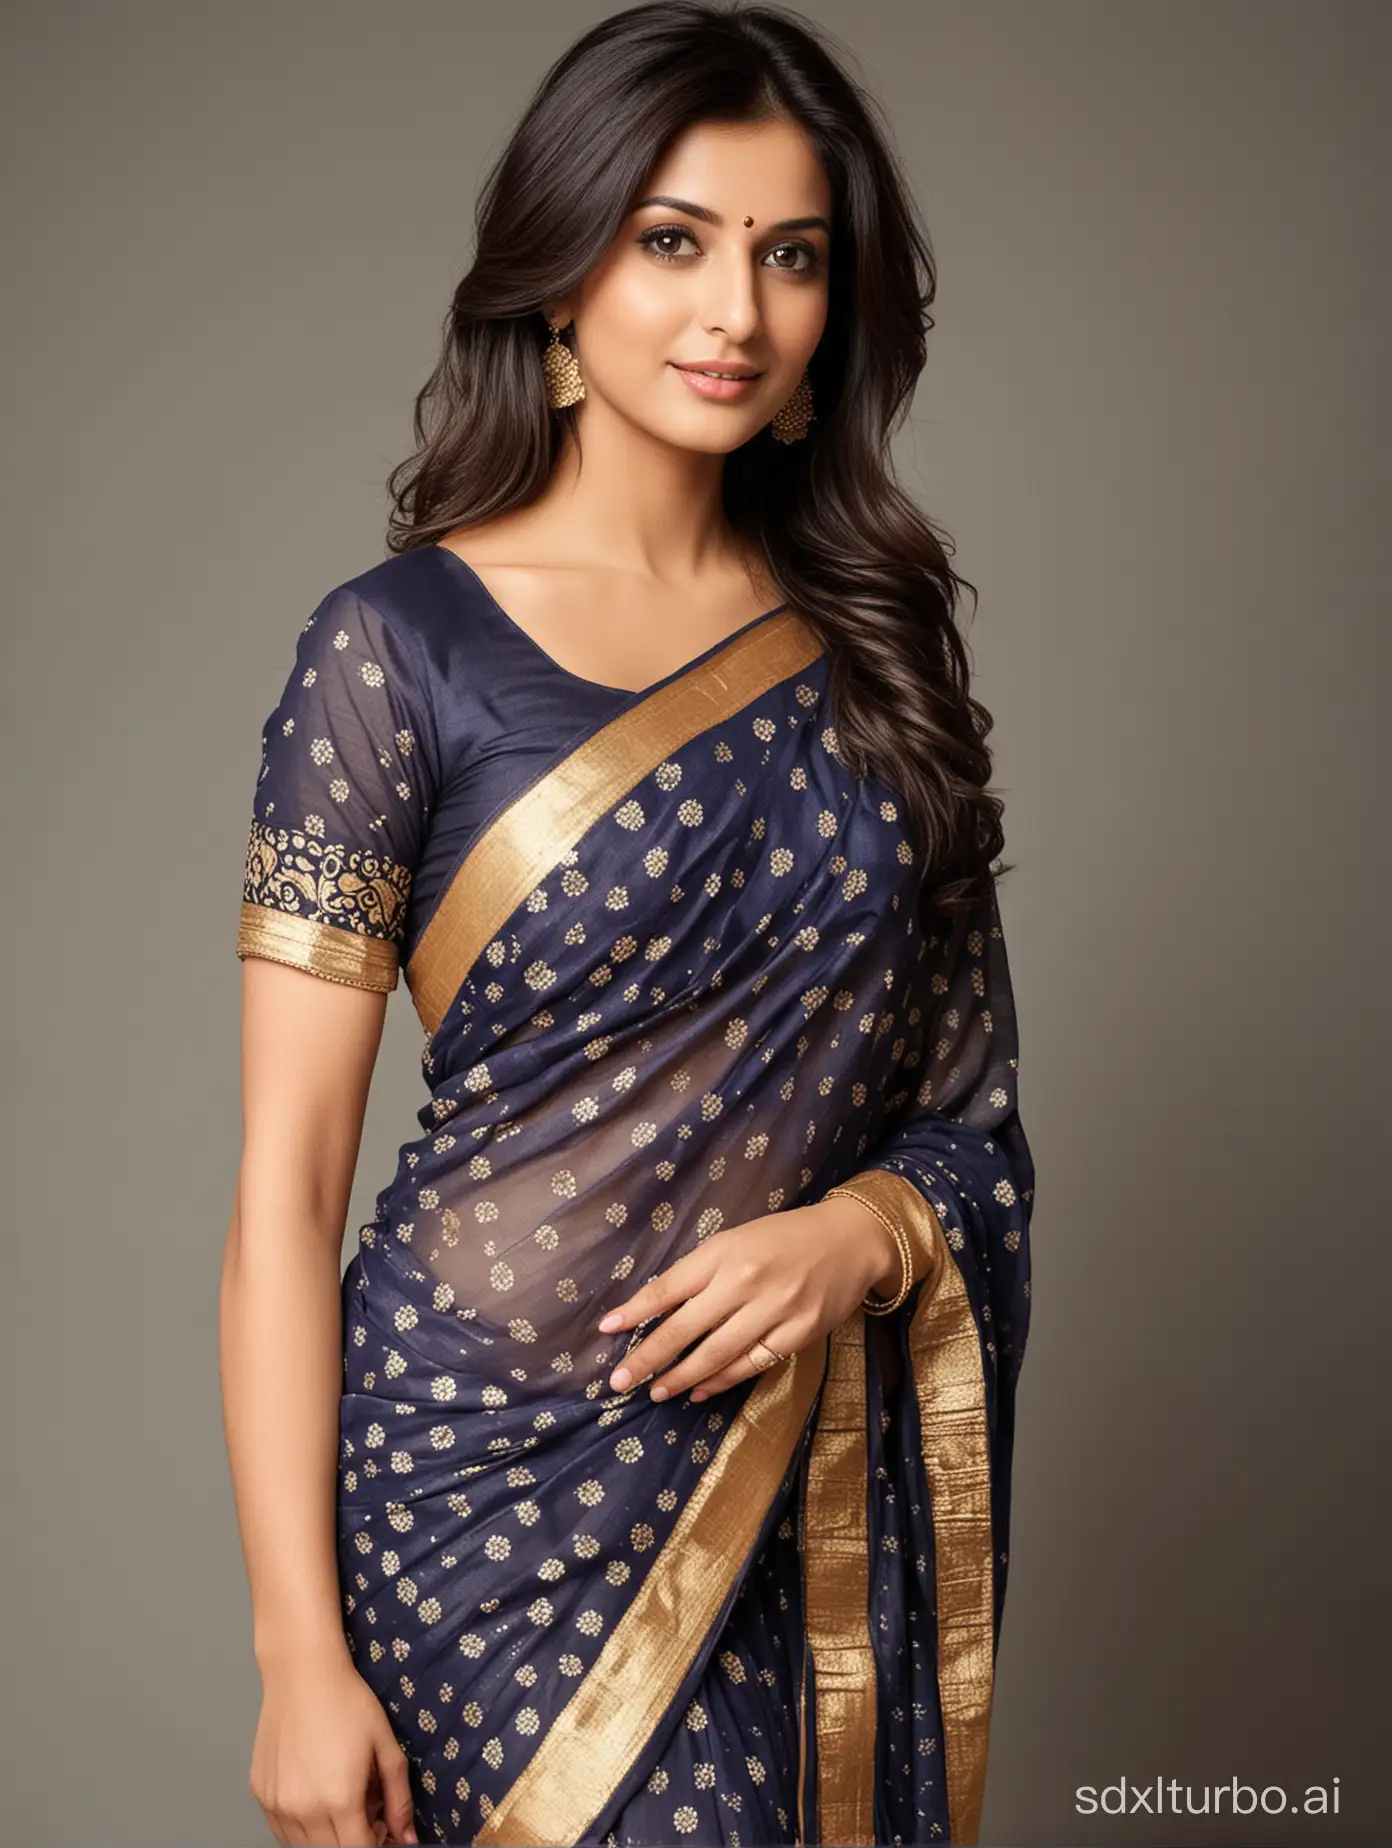 Most beautiful Indian women wearing saree  \n\n